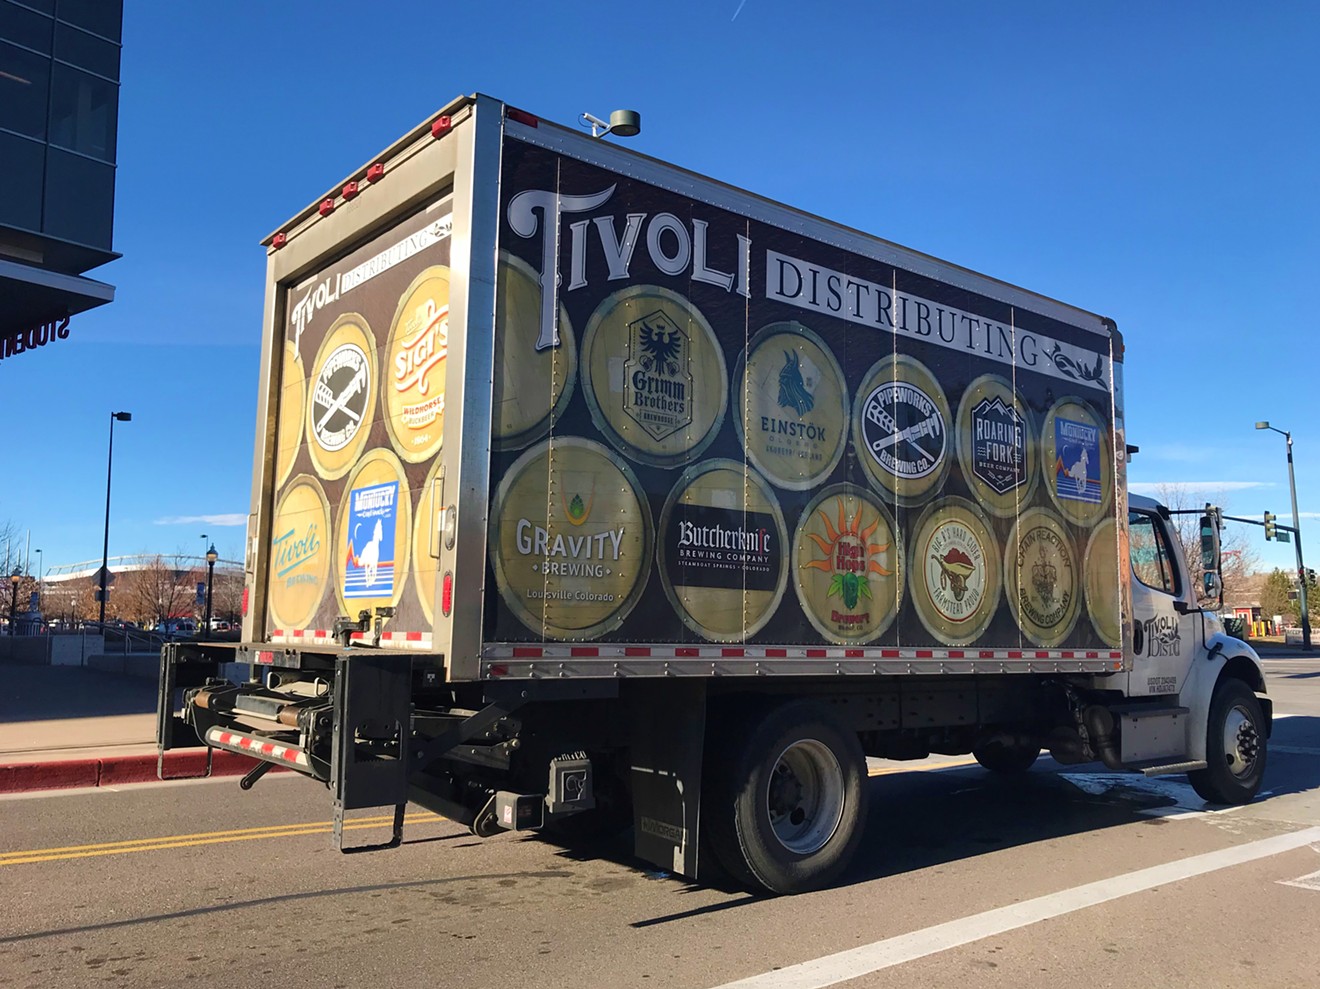 At one time, Tivoli Distributing represented several Colorado breweries.